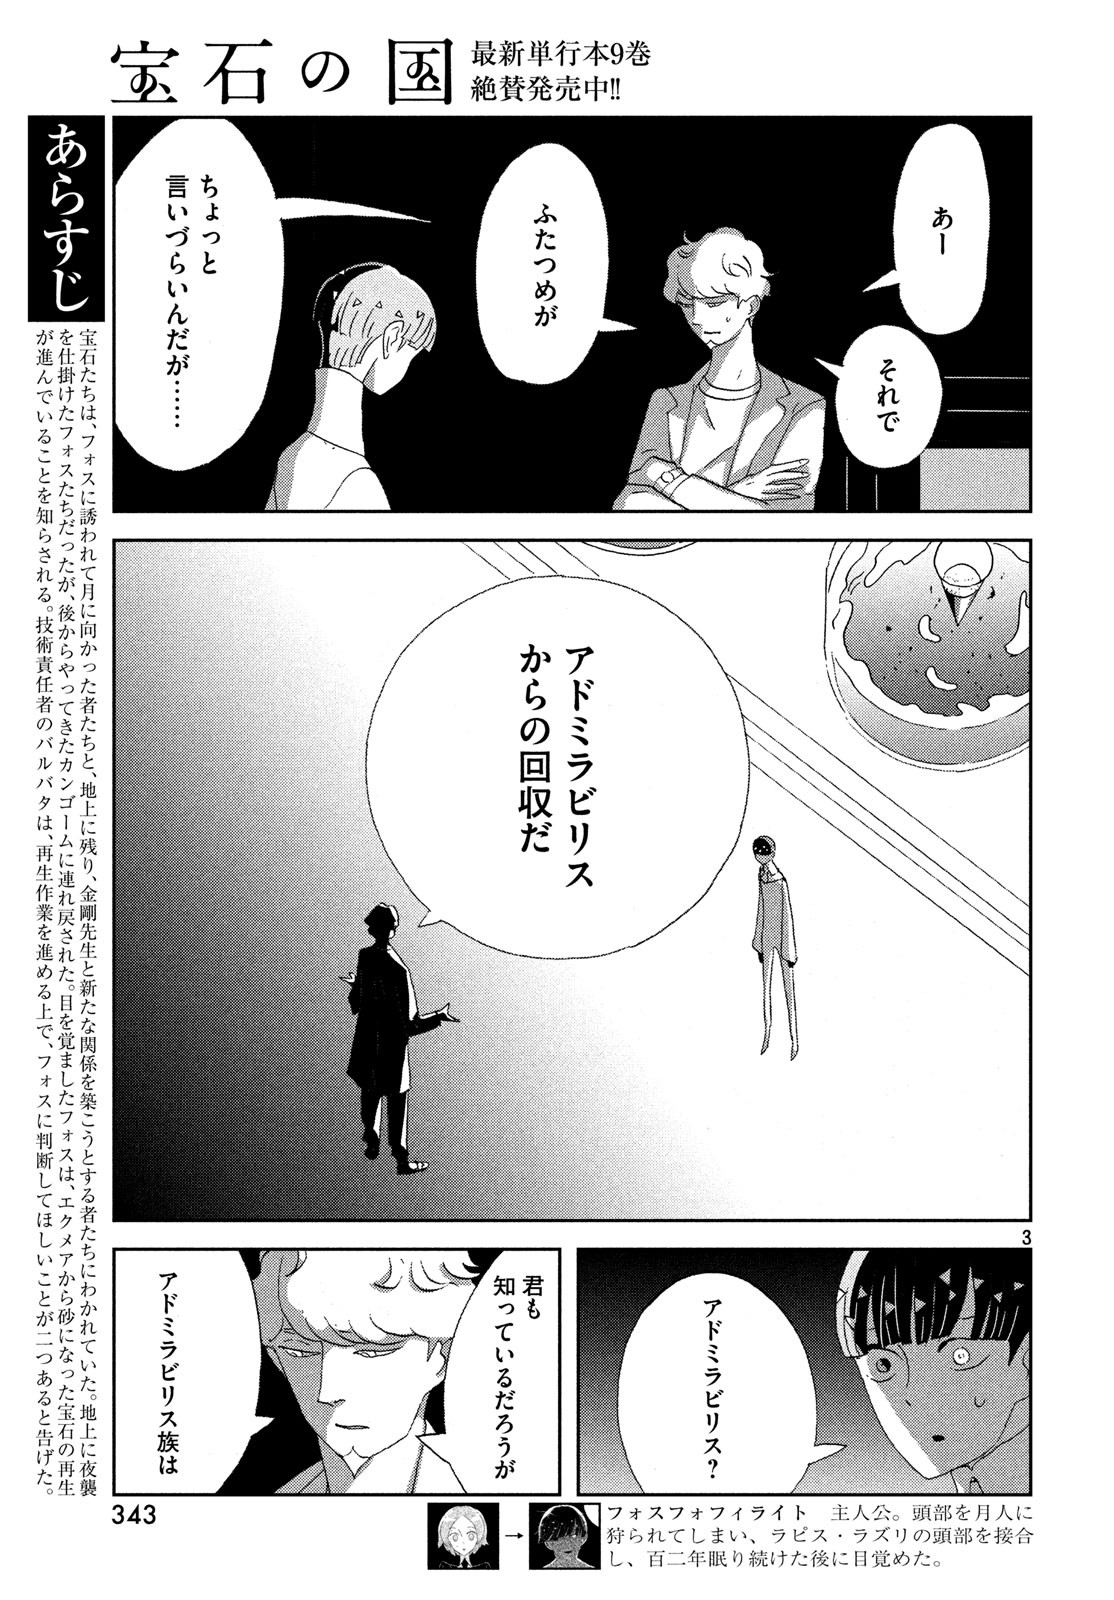 Houseki no Kuni - Chapter 73 - Page 3